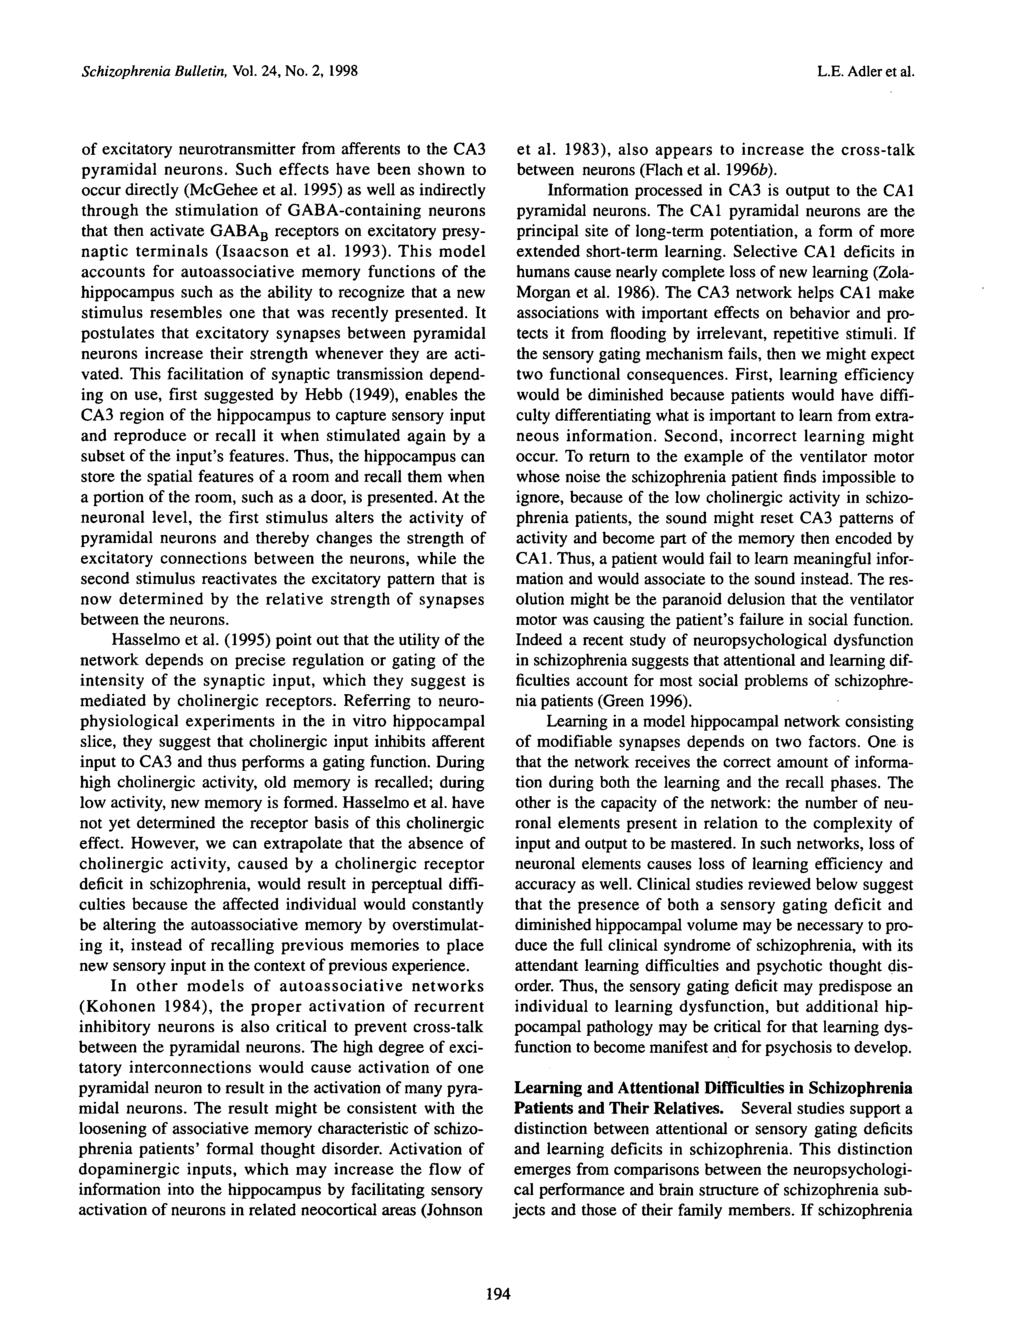 Schizophrenia Bulletin, Vol. 24, No. 2, 1998 L.E. Adler et al. of excitatory neurotransmitter from afferents to the CA3 pyramidal neurons.